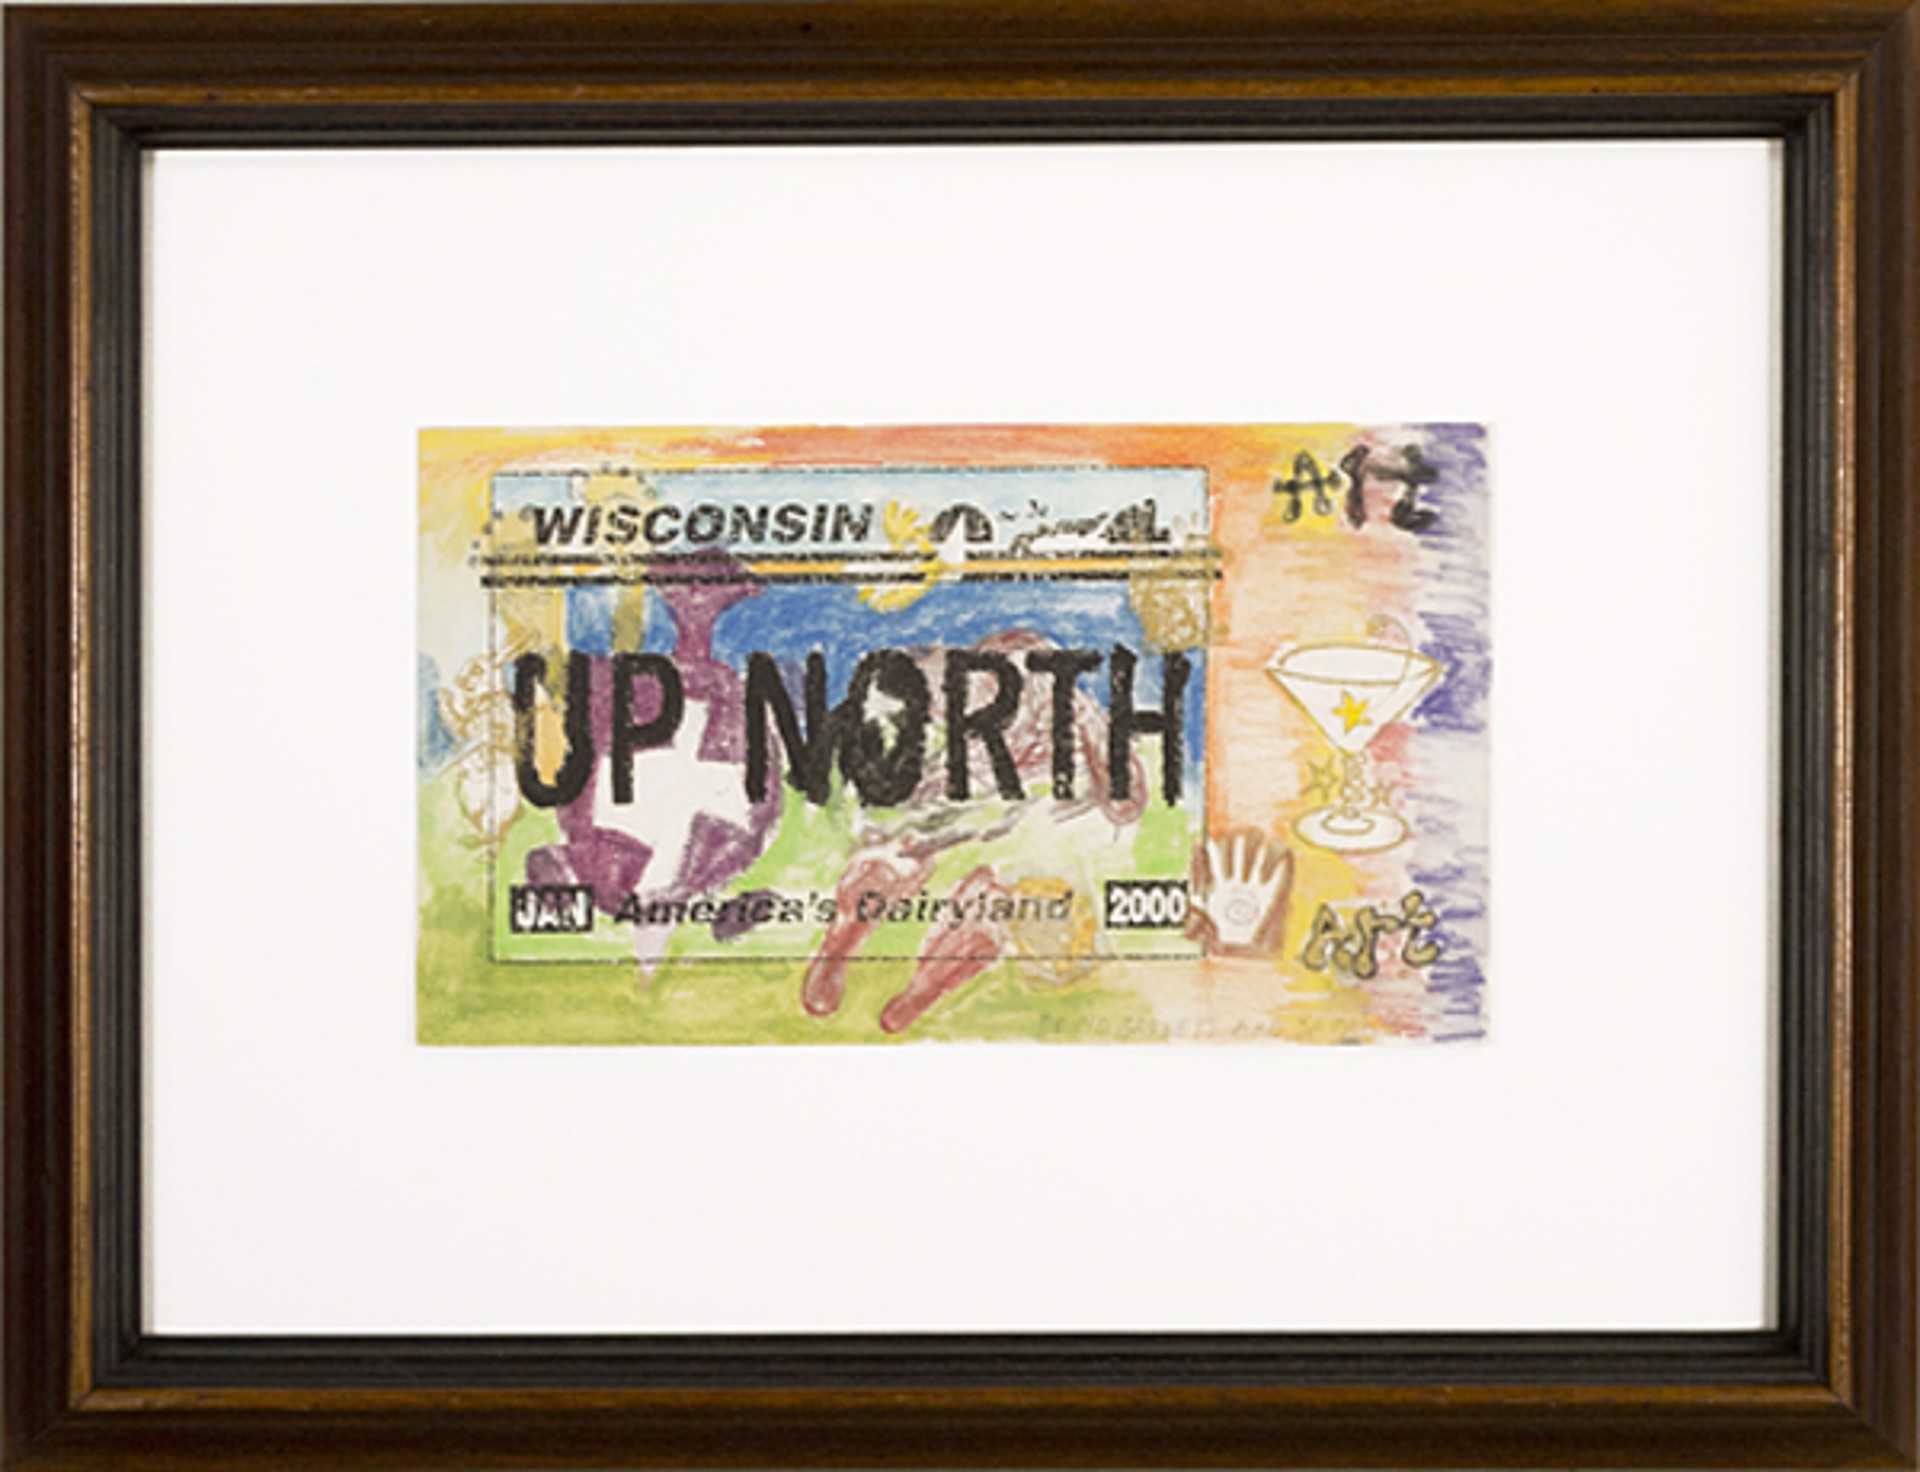 Up North Wisconsin Series: Morph Dog, Rabbit & Beaver by David & Sarah Barnett